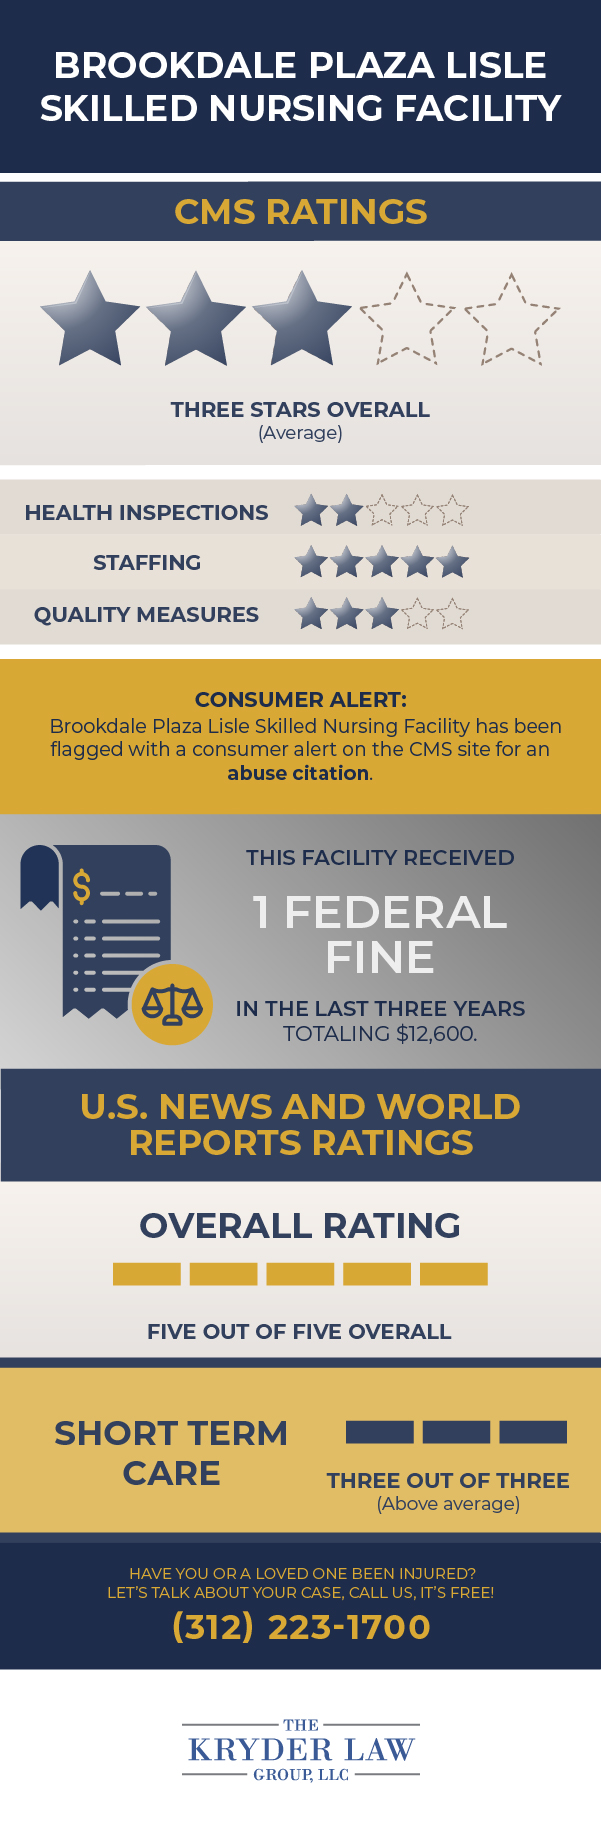 Brookdale Plaza Lisle Skilled Nursing Facility CMS Ratings and U.S. News and World Report Ratings